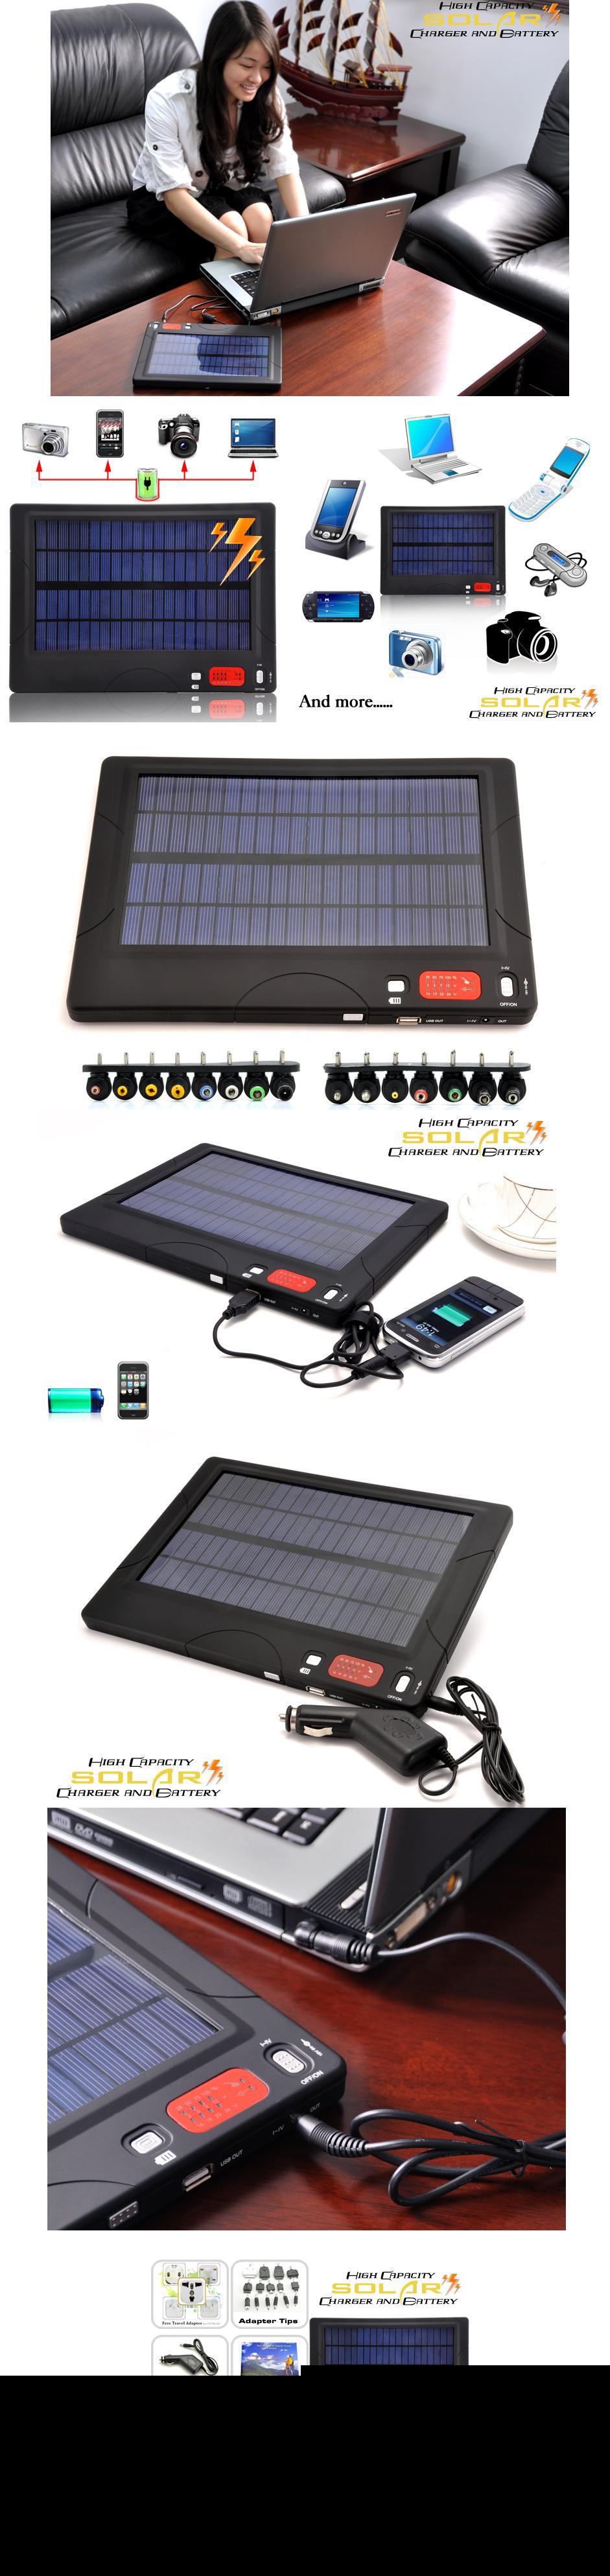 Chargeur solaire - 3/5/6/9/12/16/19/22/24V V - batterie 20000 mAh - Ref 3394860 Image 8